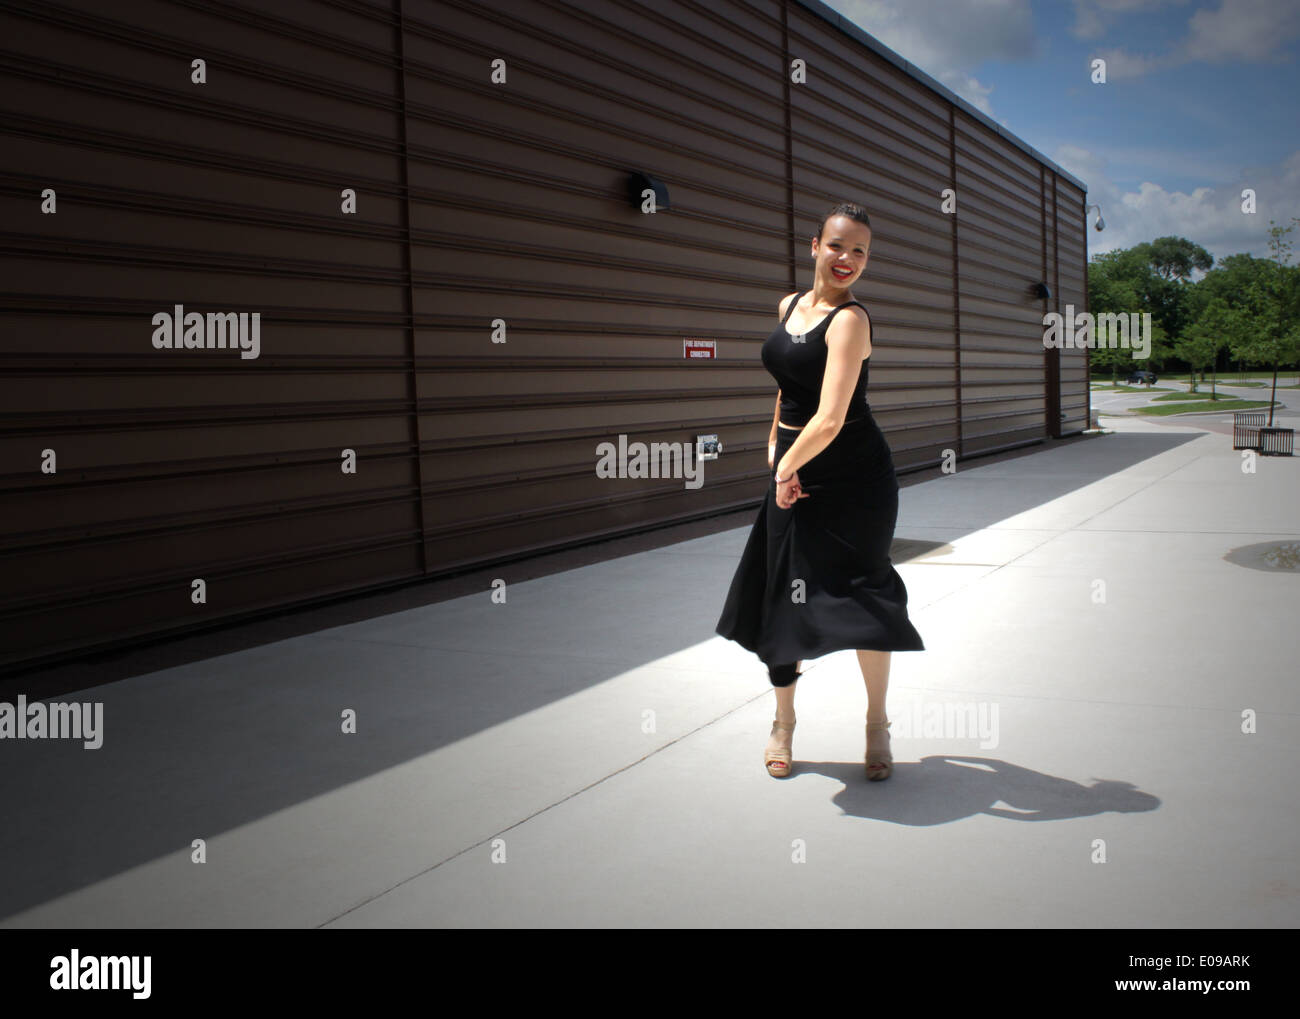 Girl in a black dress dances flamenco on the street in Toronto, Canada Stock Photo